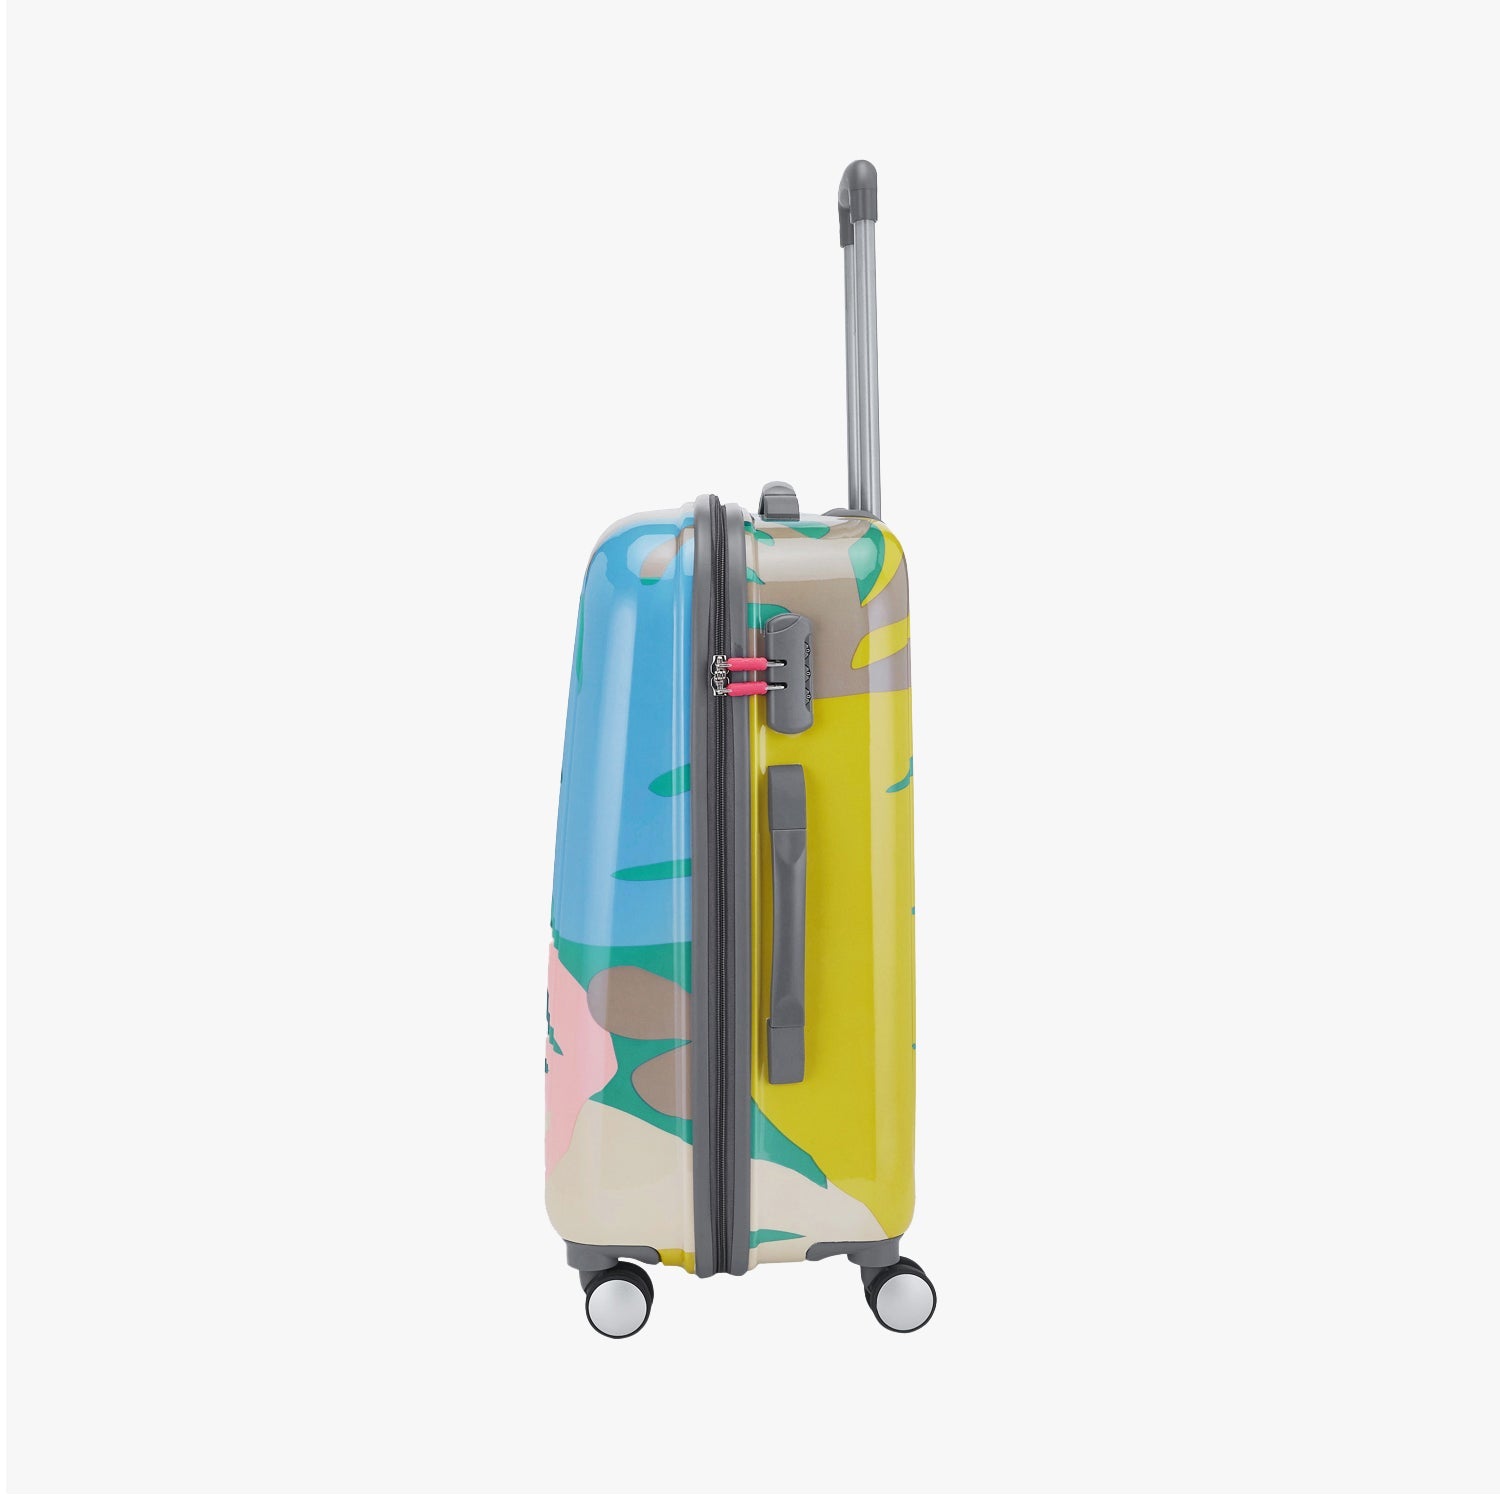 Florentine Hard Luggage - Cyan